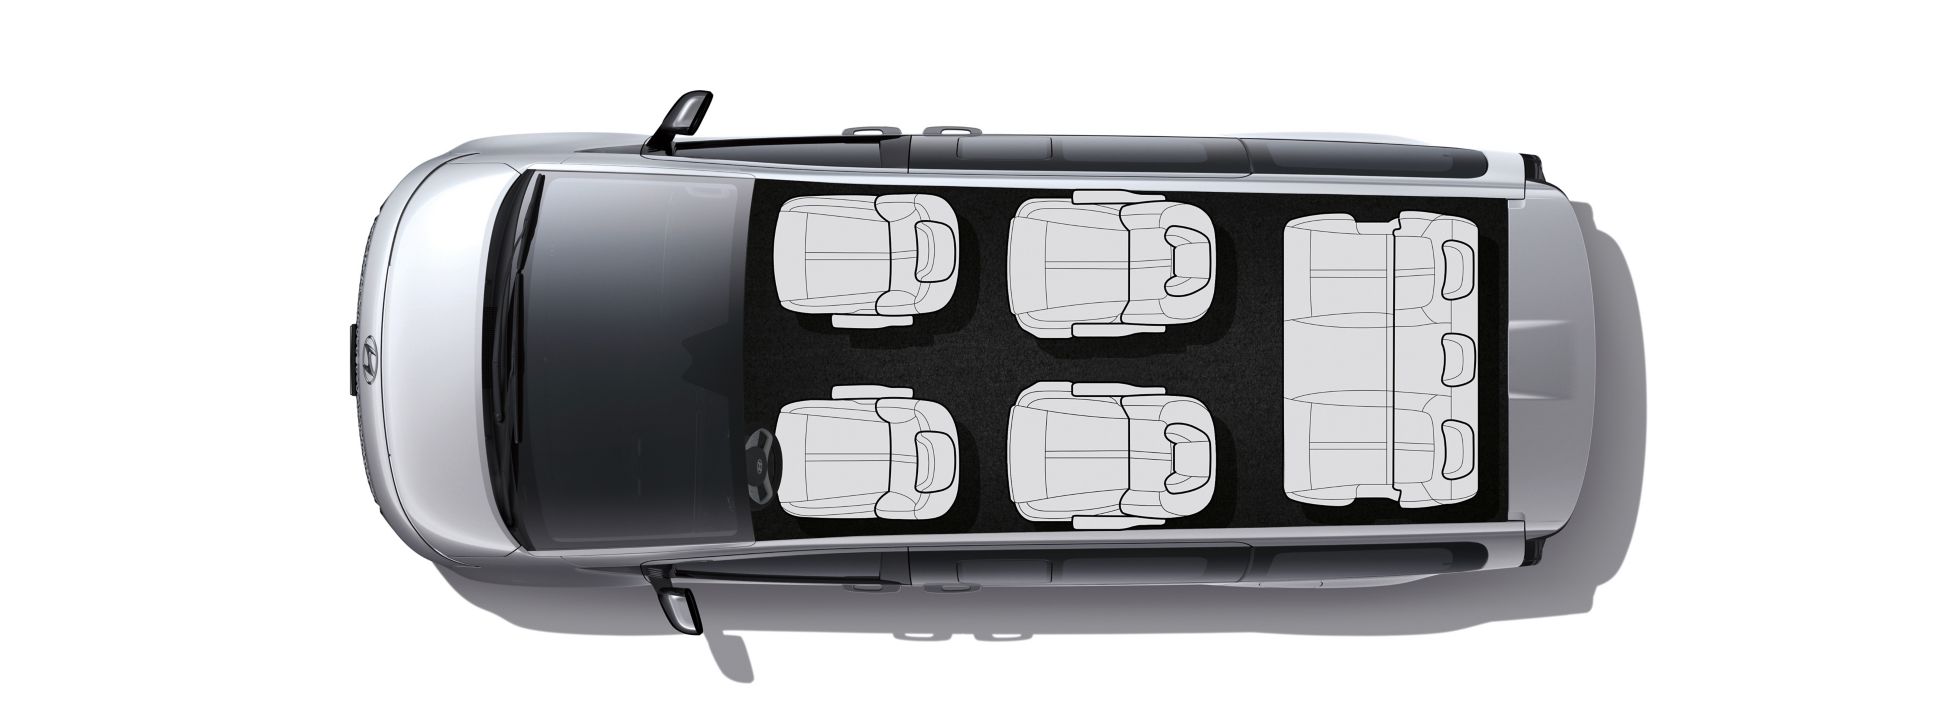 Topview of the Hyundai Staria 7 seats